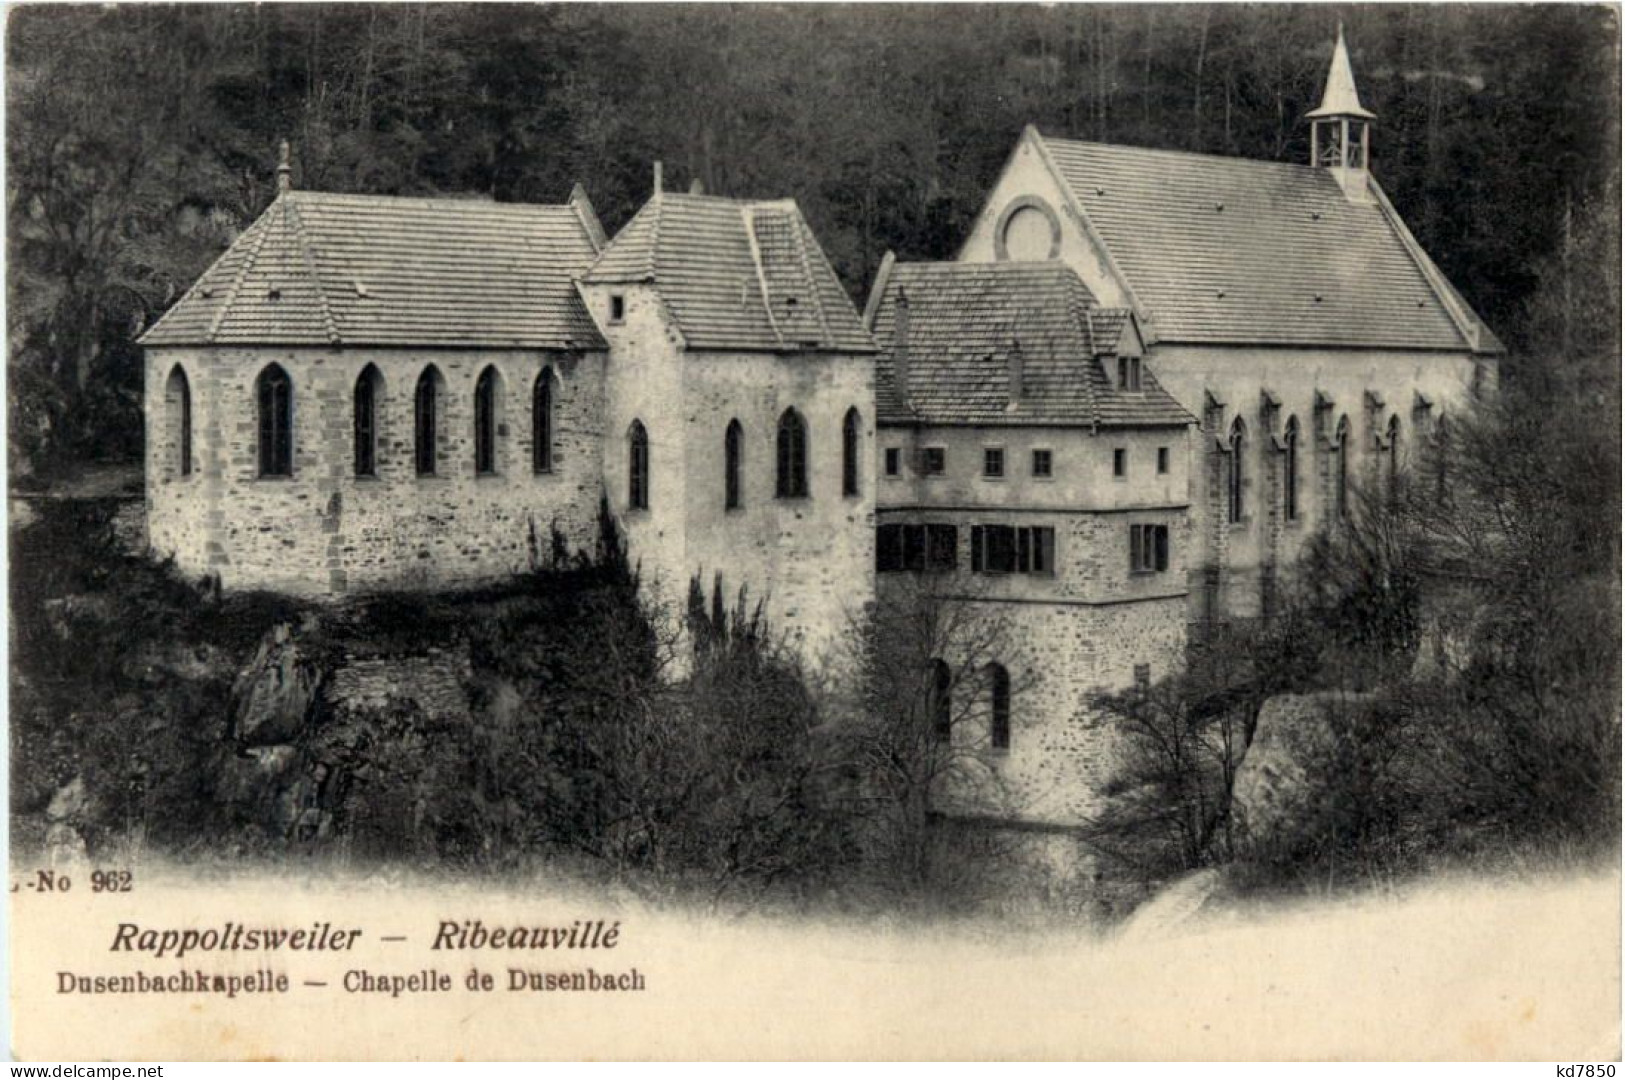 Rappoltsweiler - Ribeauville - Dusenbachkapelle - Ribeauvillé